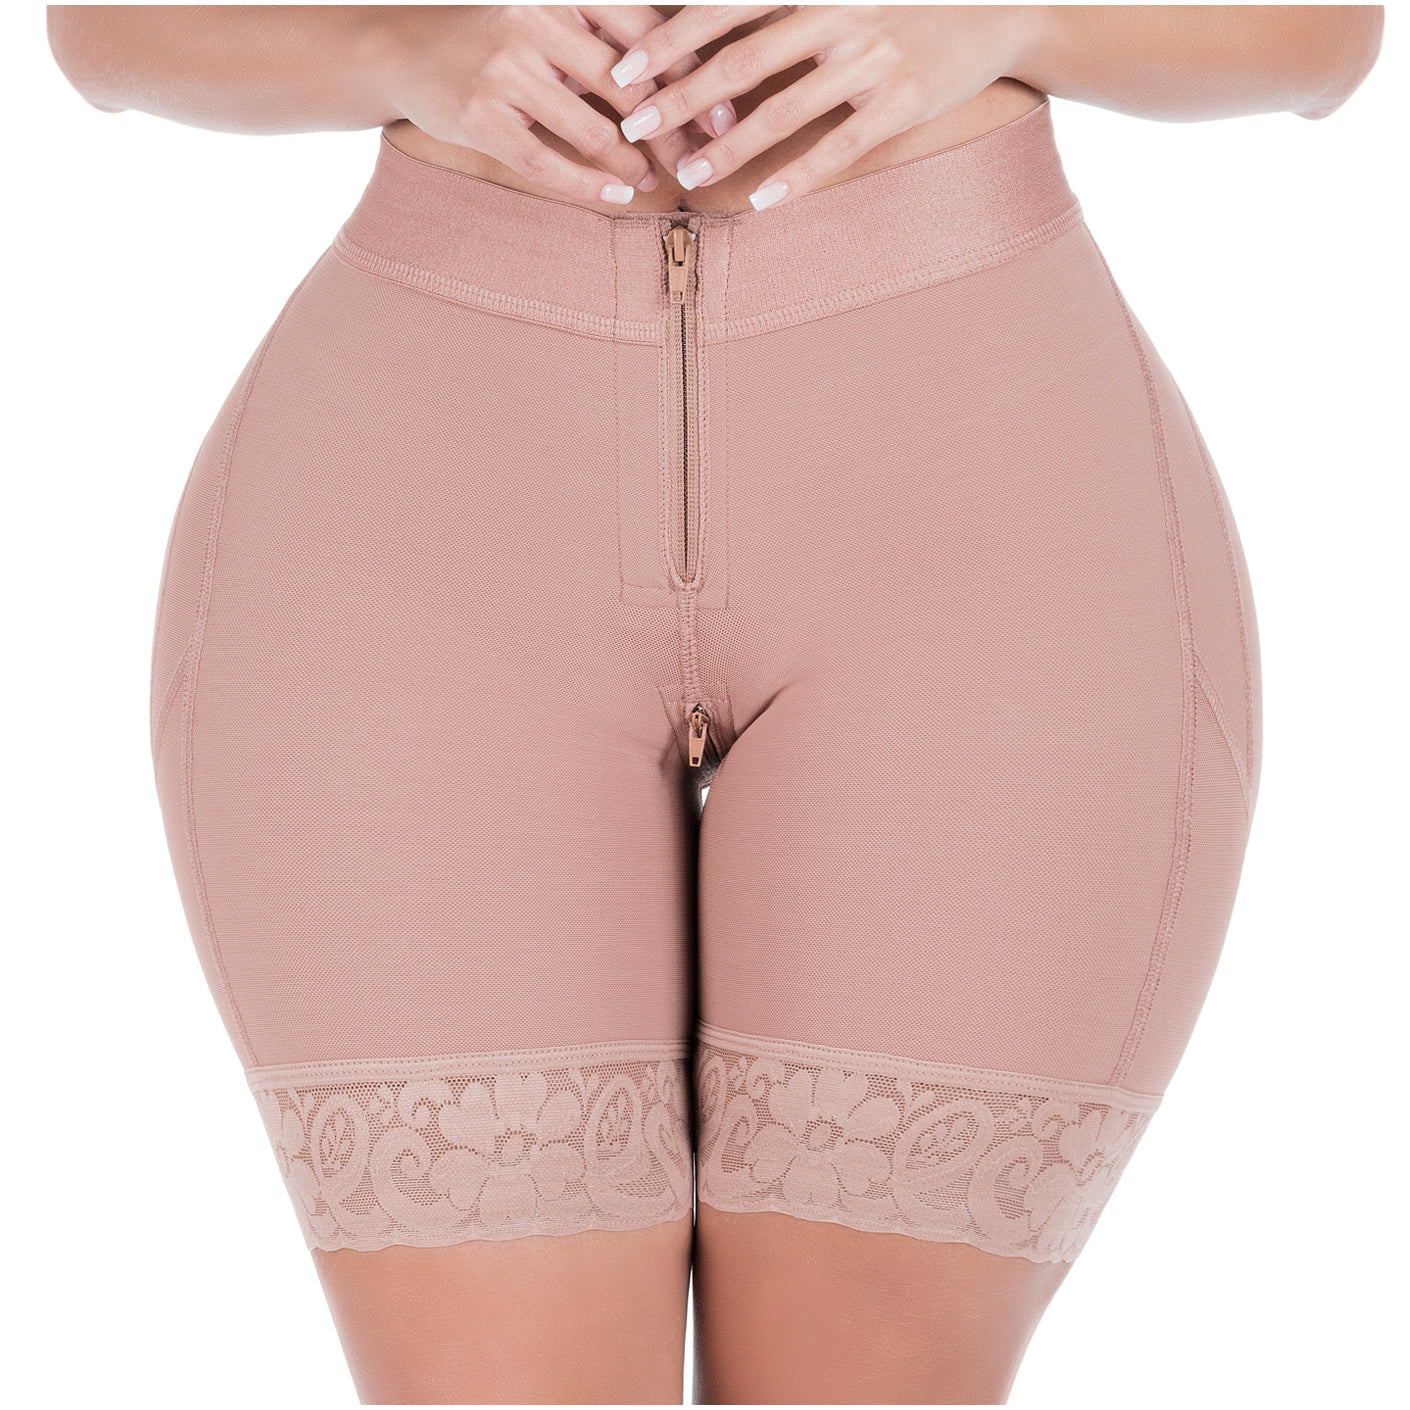 Fajas MariaE FU101  High-Waisted Tummy Control Shorts for Women